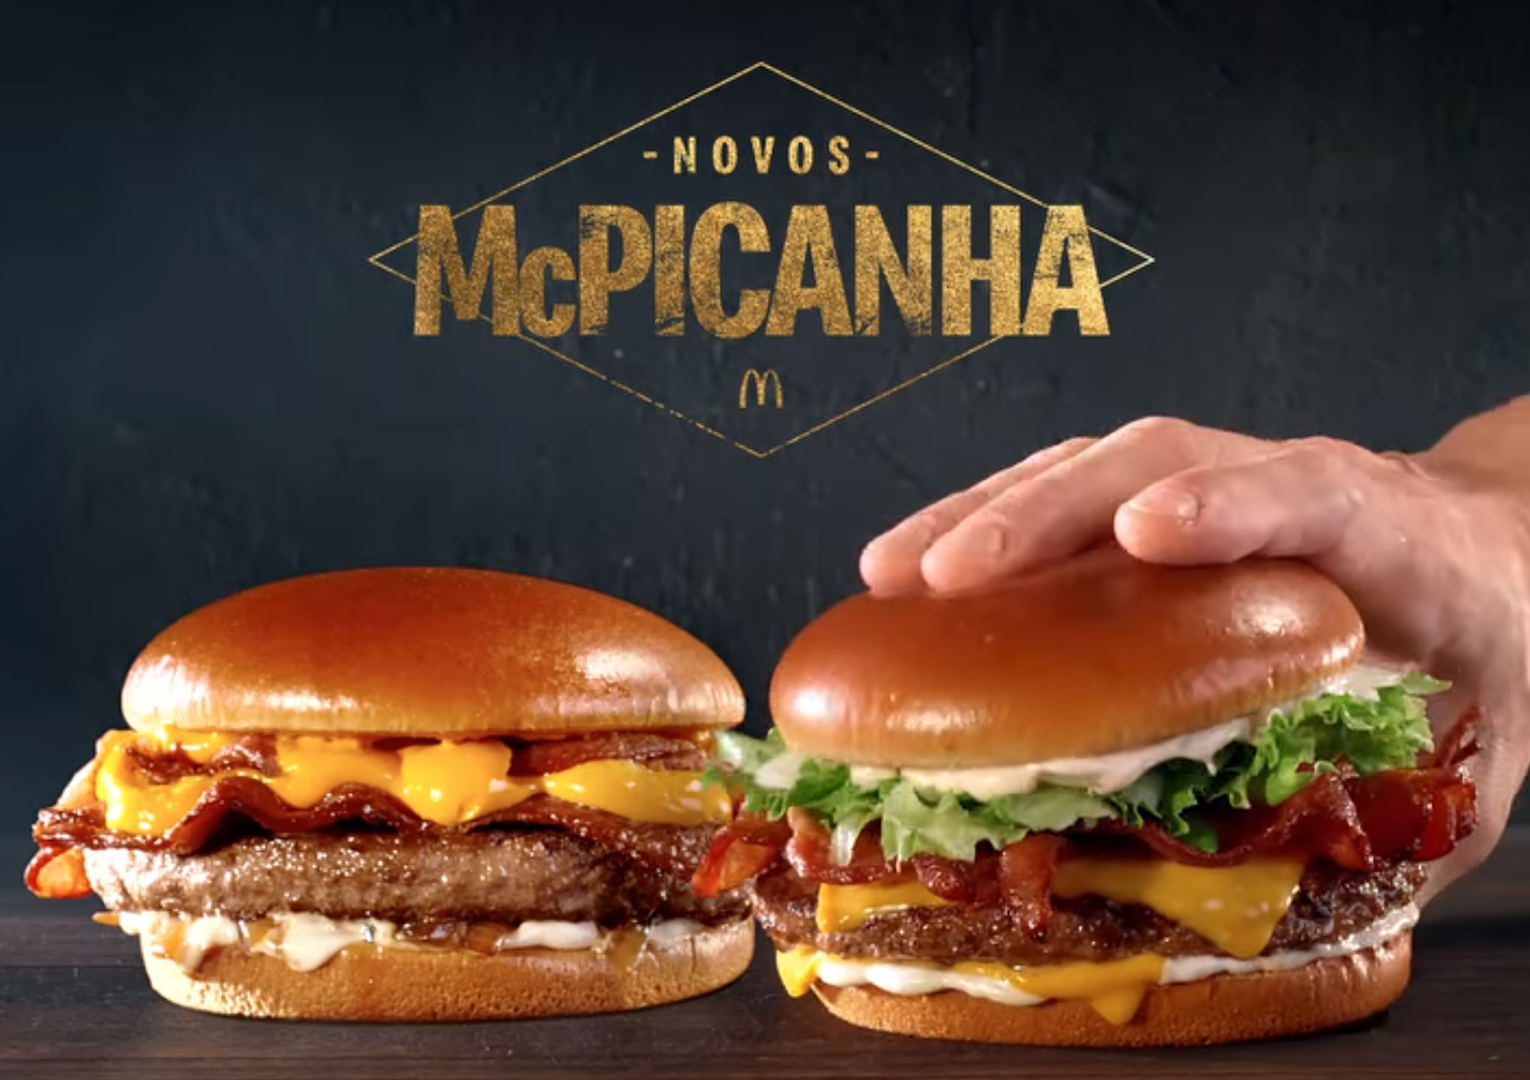 McDonald's tira McPicanha do cardápio - cardápio do mcdonald's